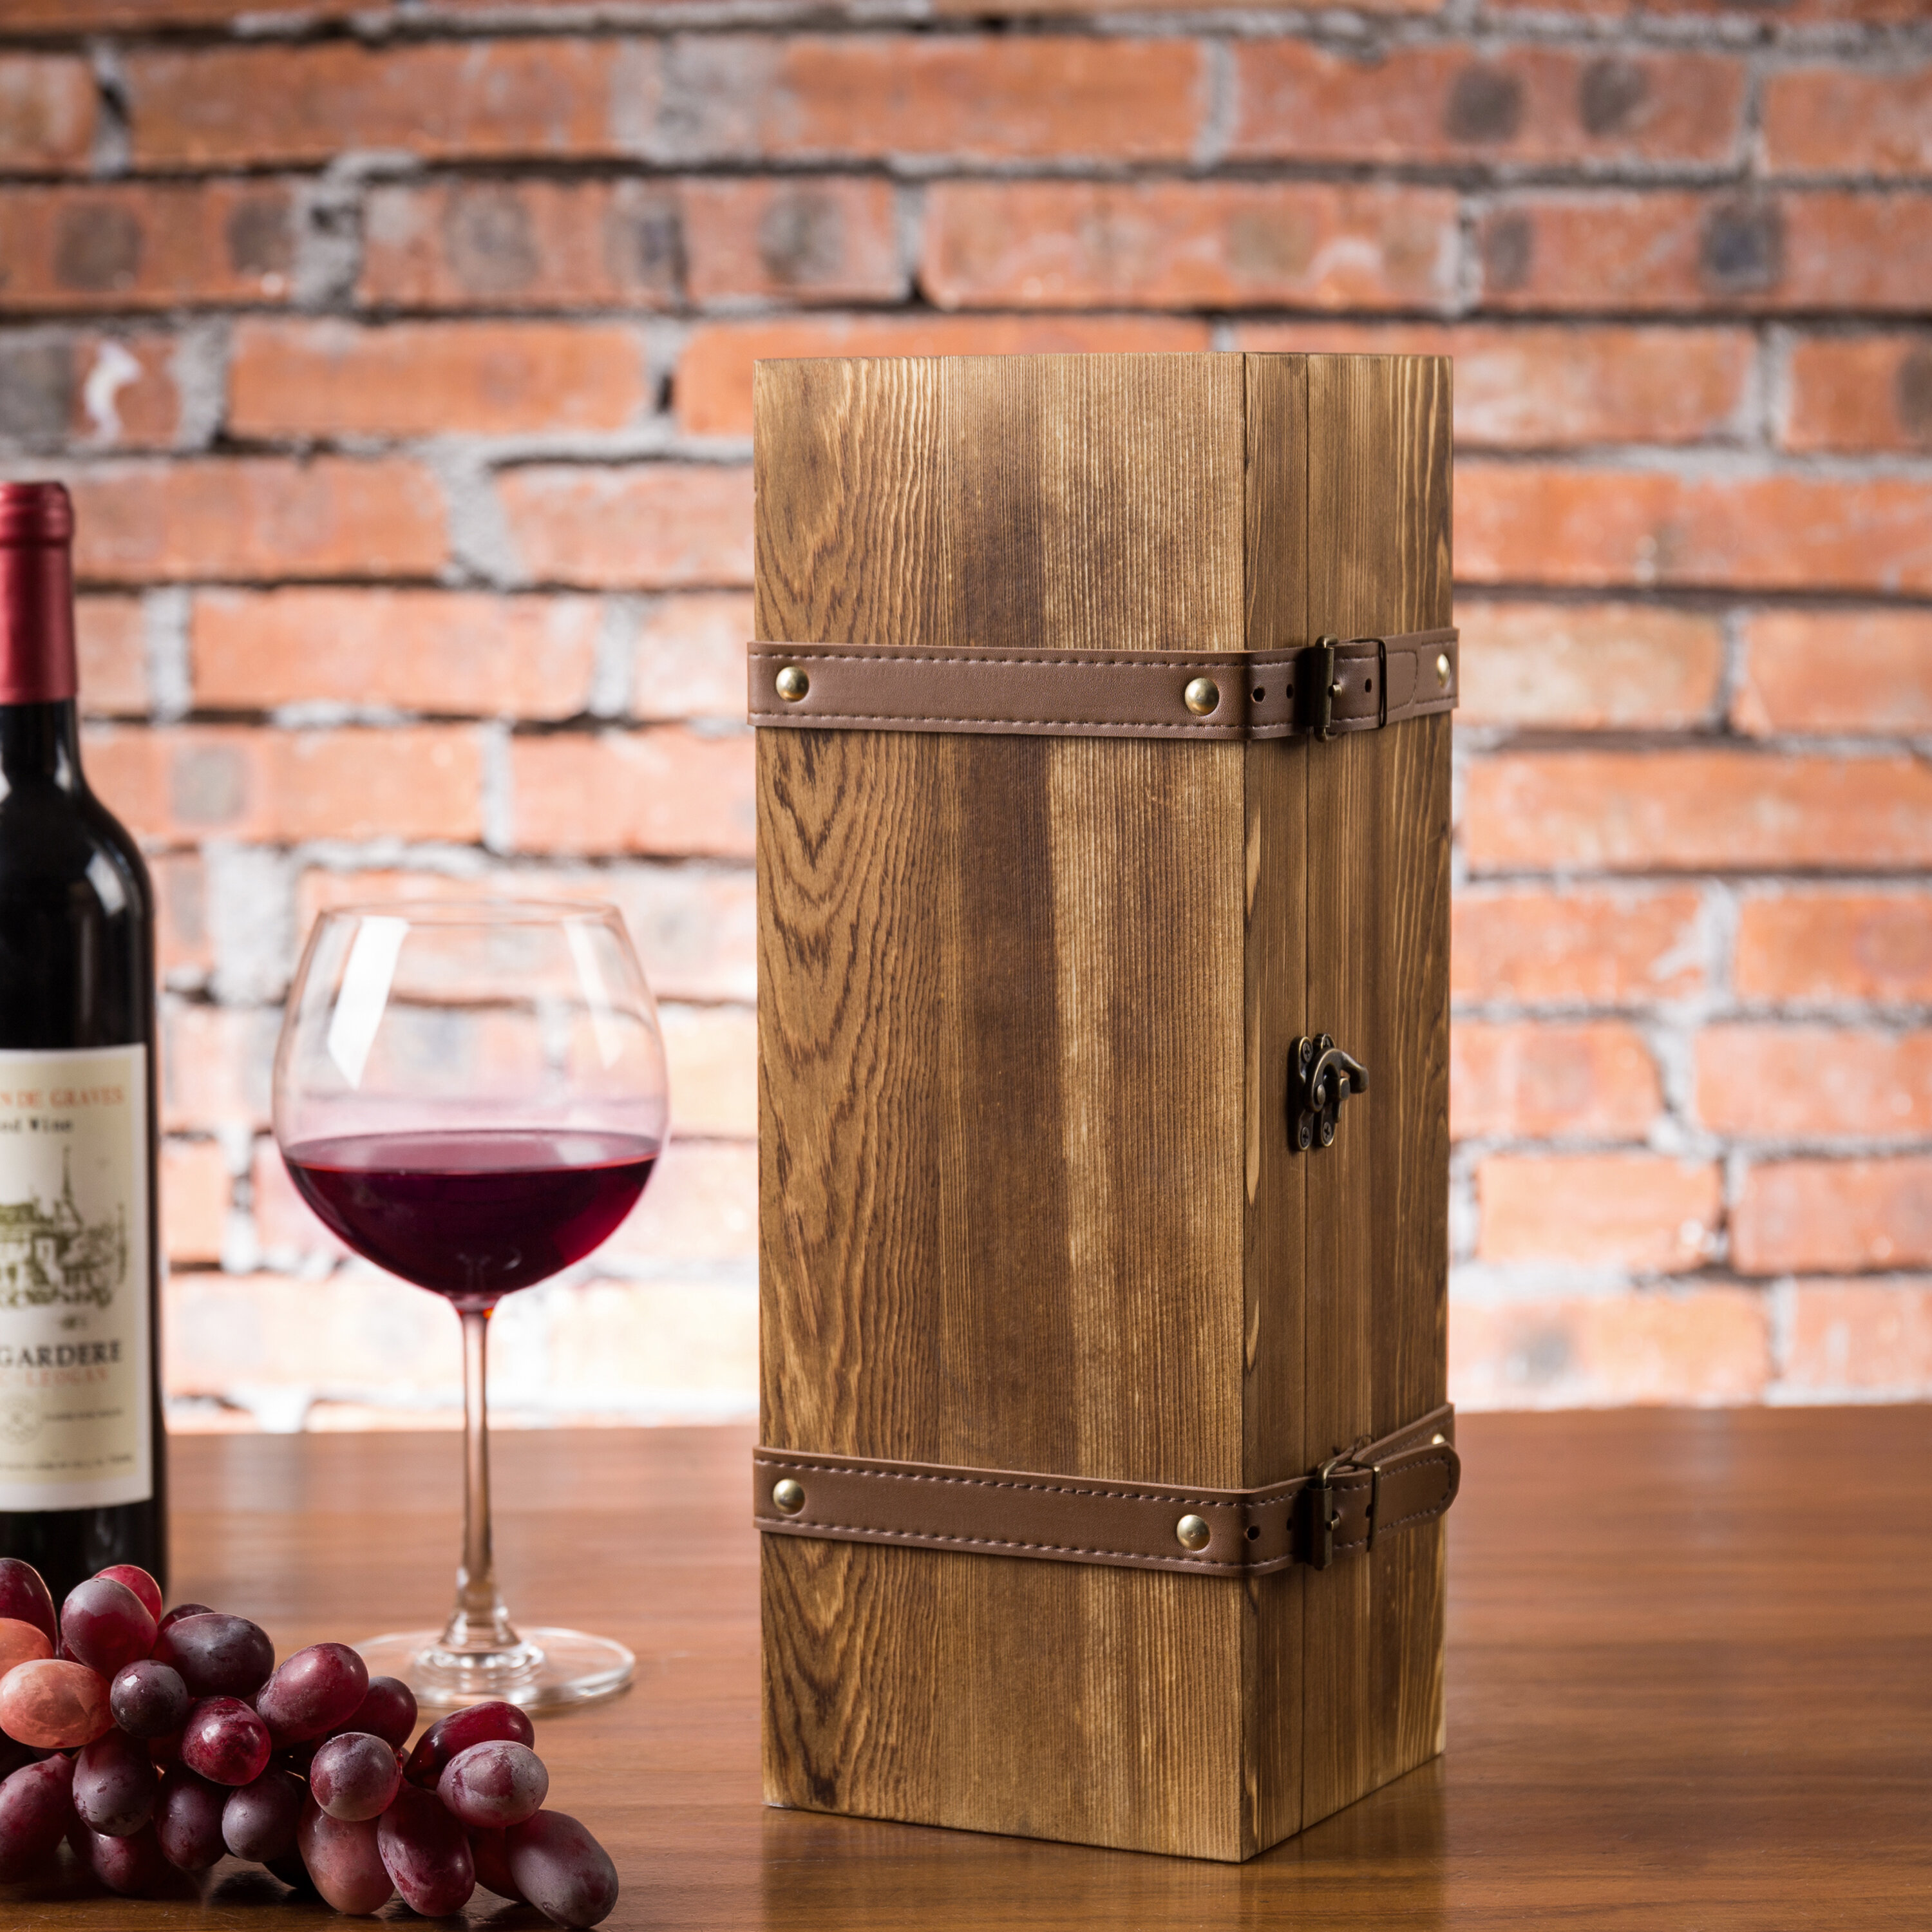 2-Bottle Vintage Trunk Wine Box by Twine - The Best Wine Store